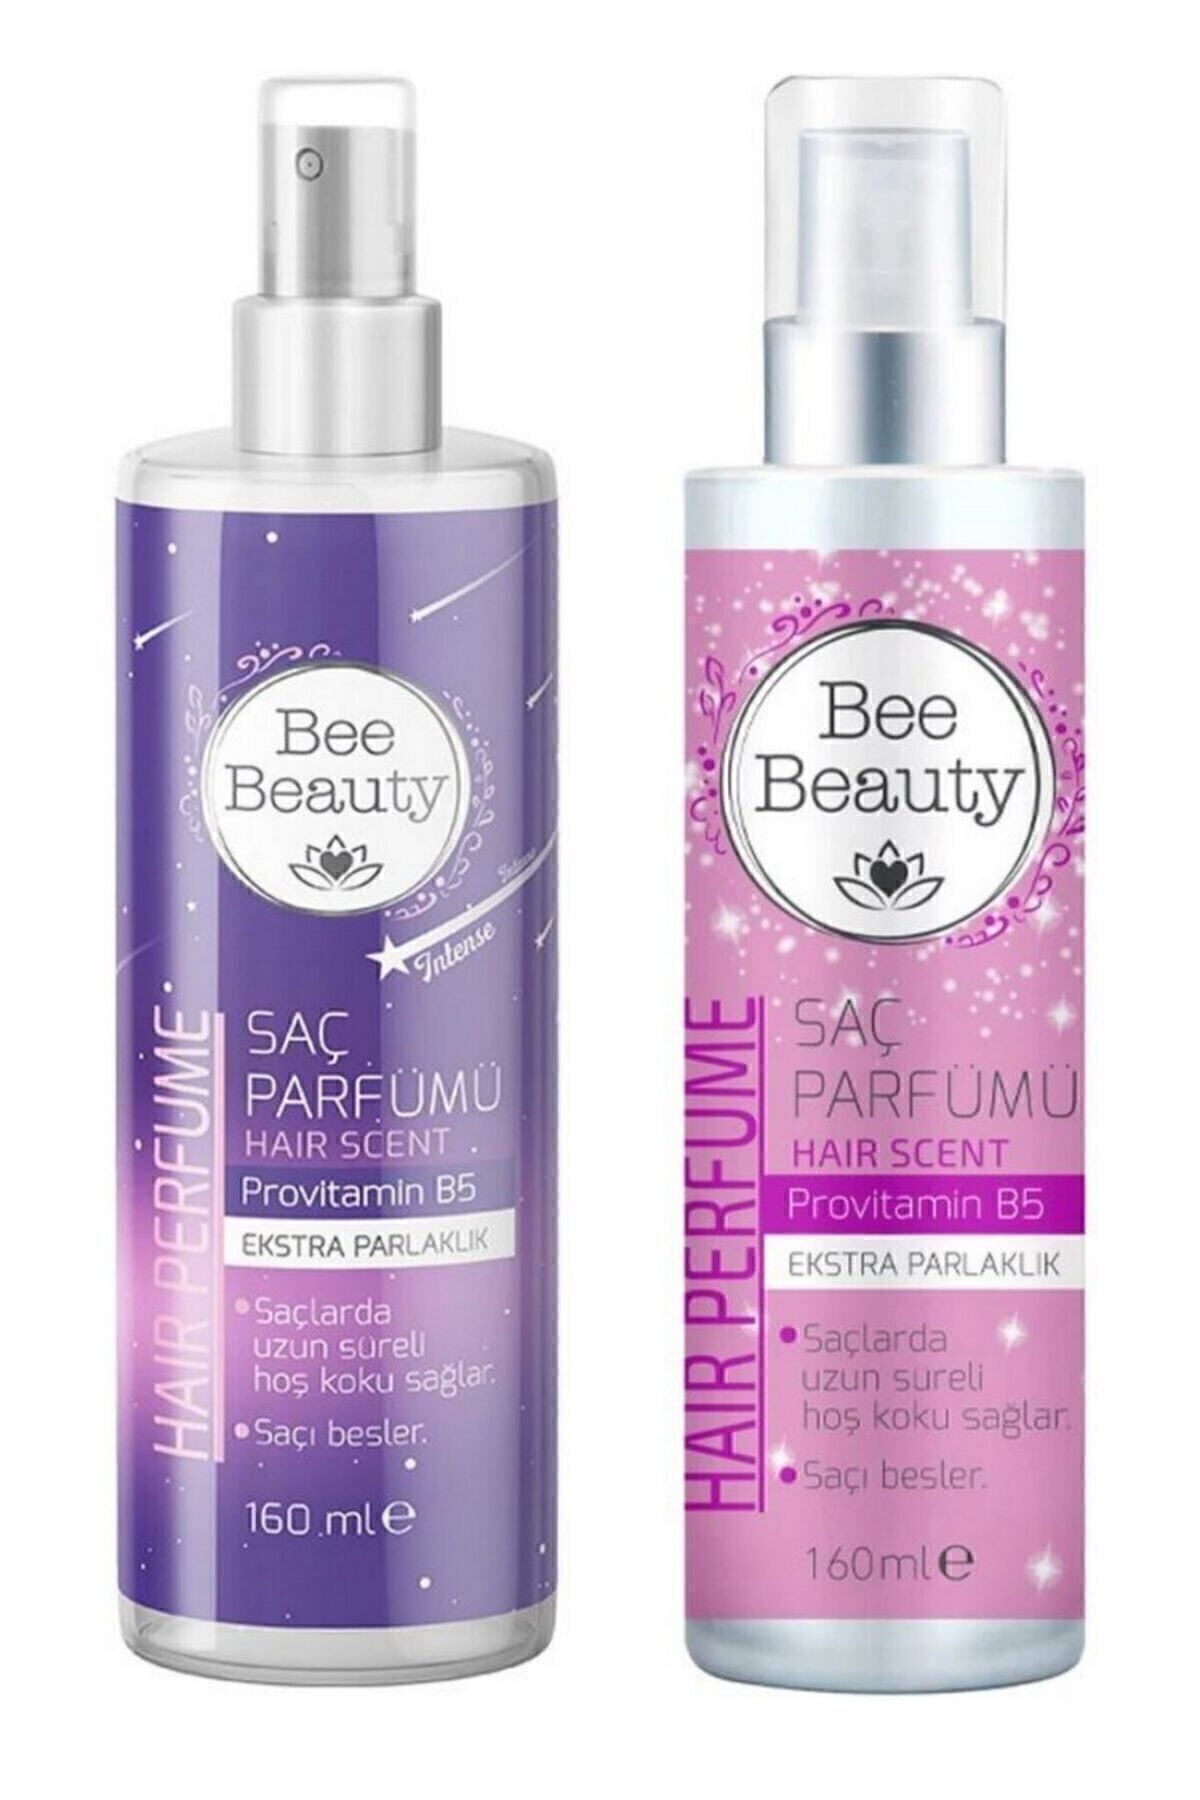 Bee Beauty Saç Parfümü 160 ml ve Intense Saç Parfümü 160 ml